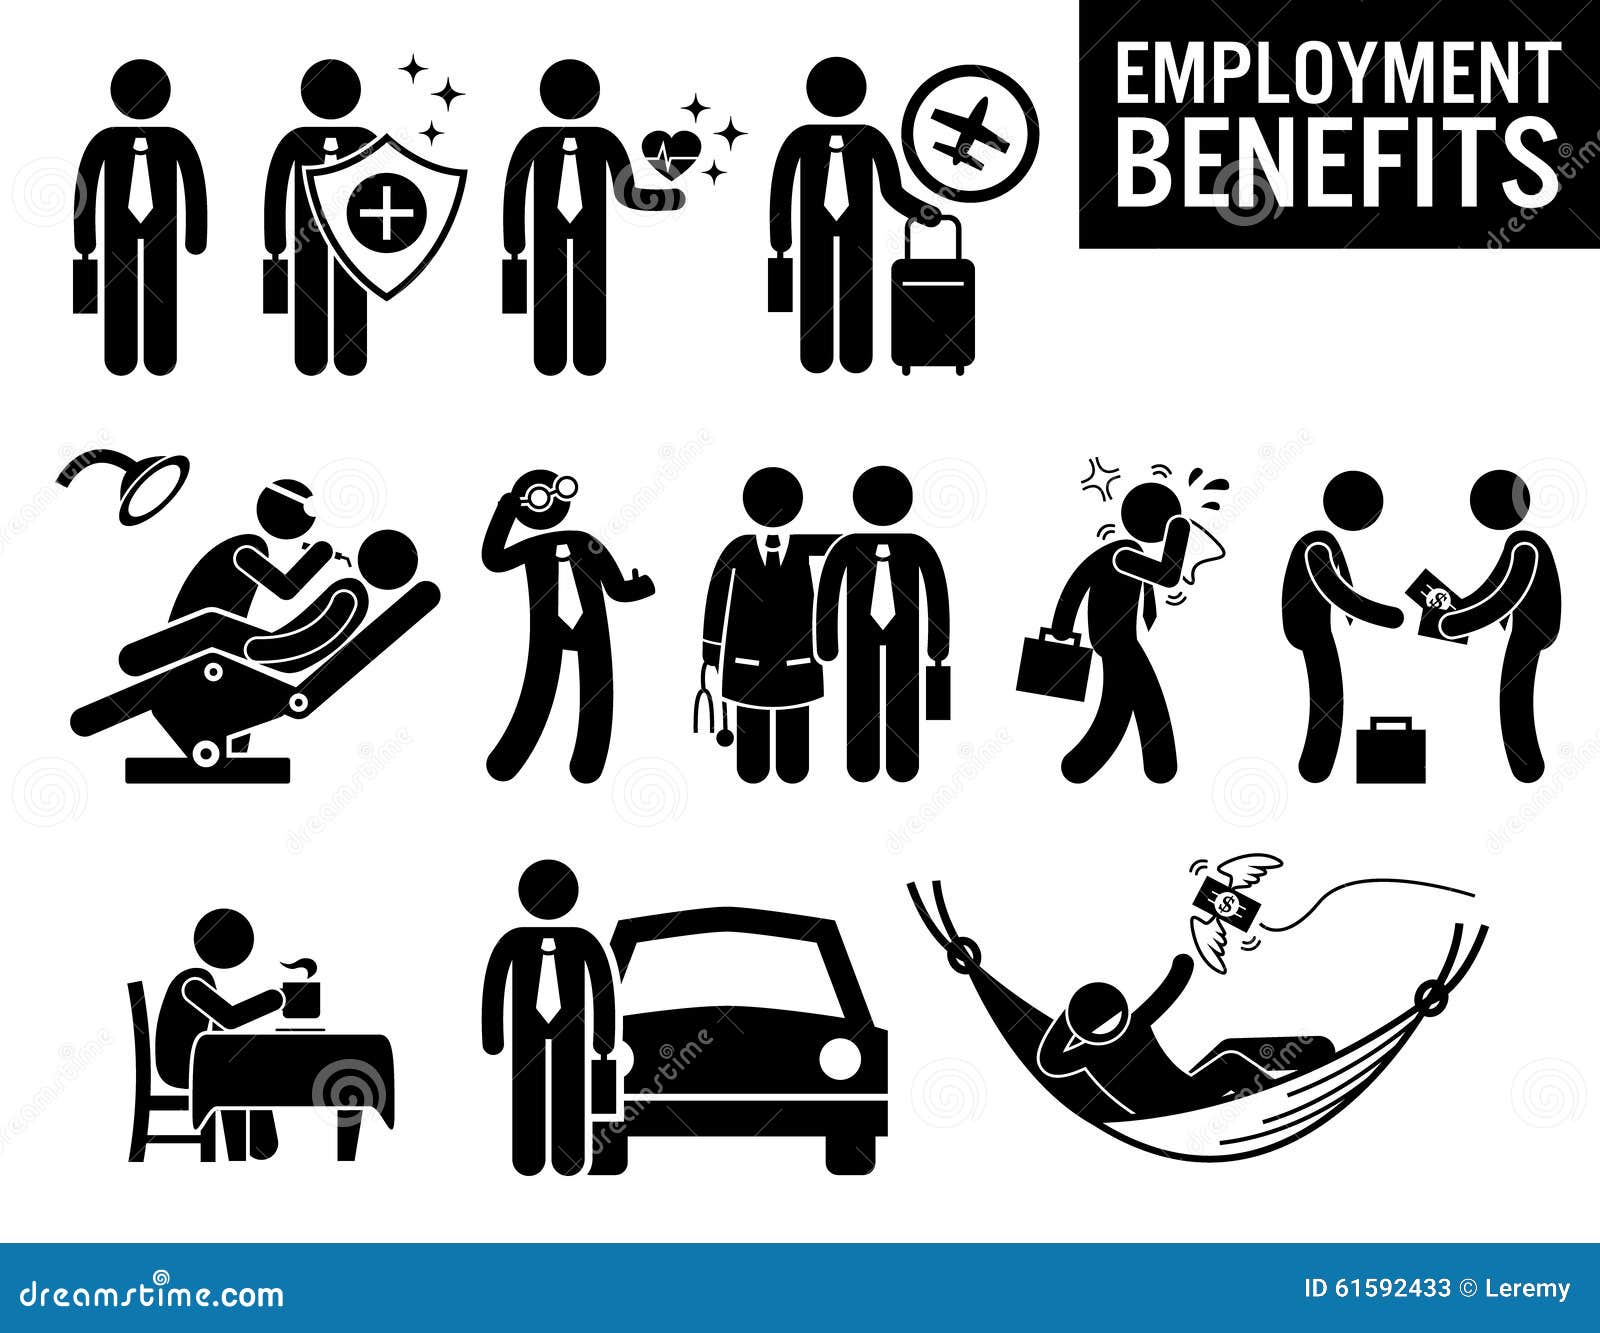 free clipart employee benefits - photo #27